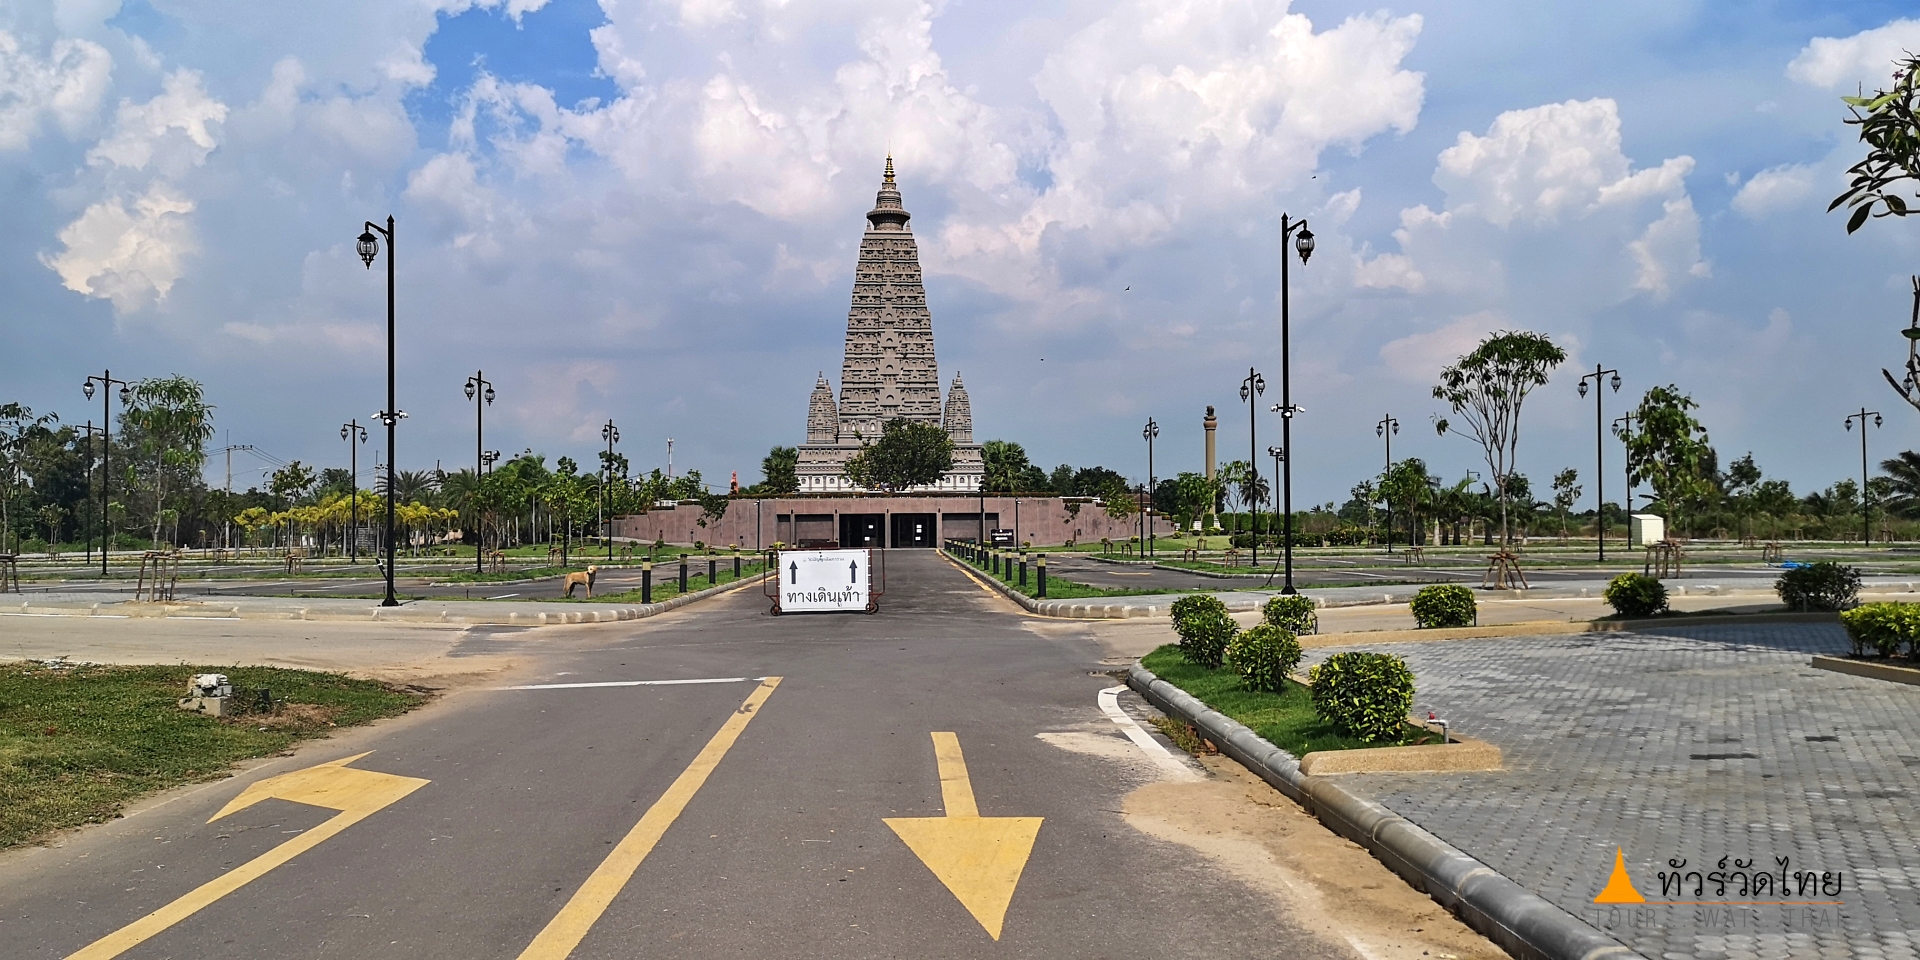 Wat Panyanantaramจุดที่1